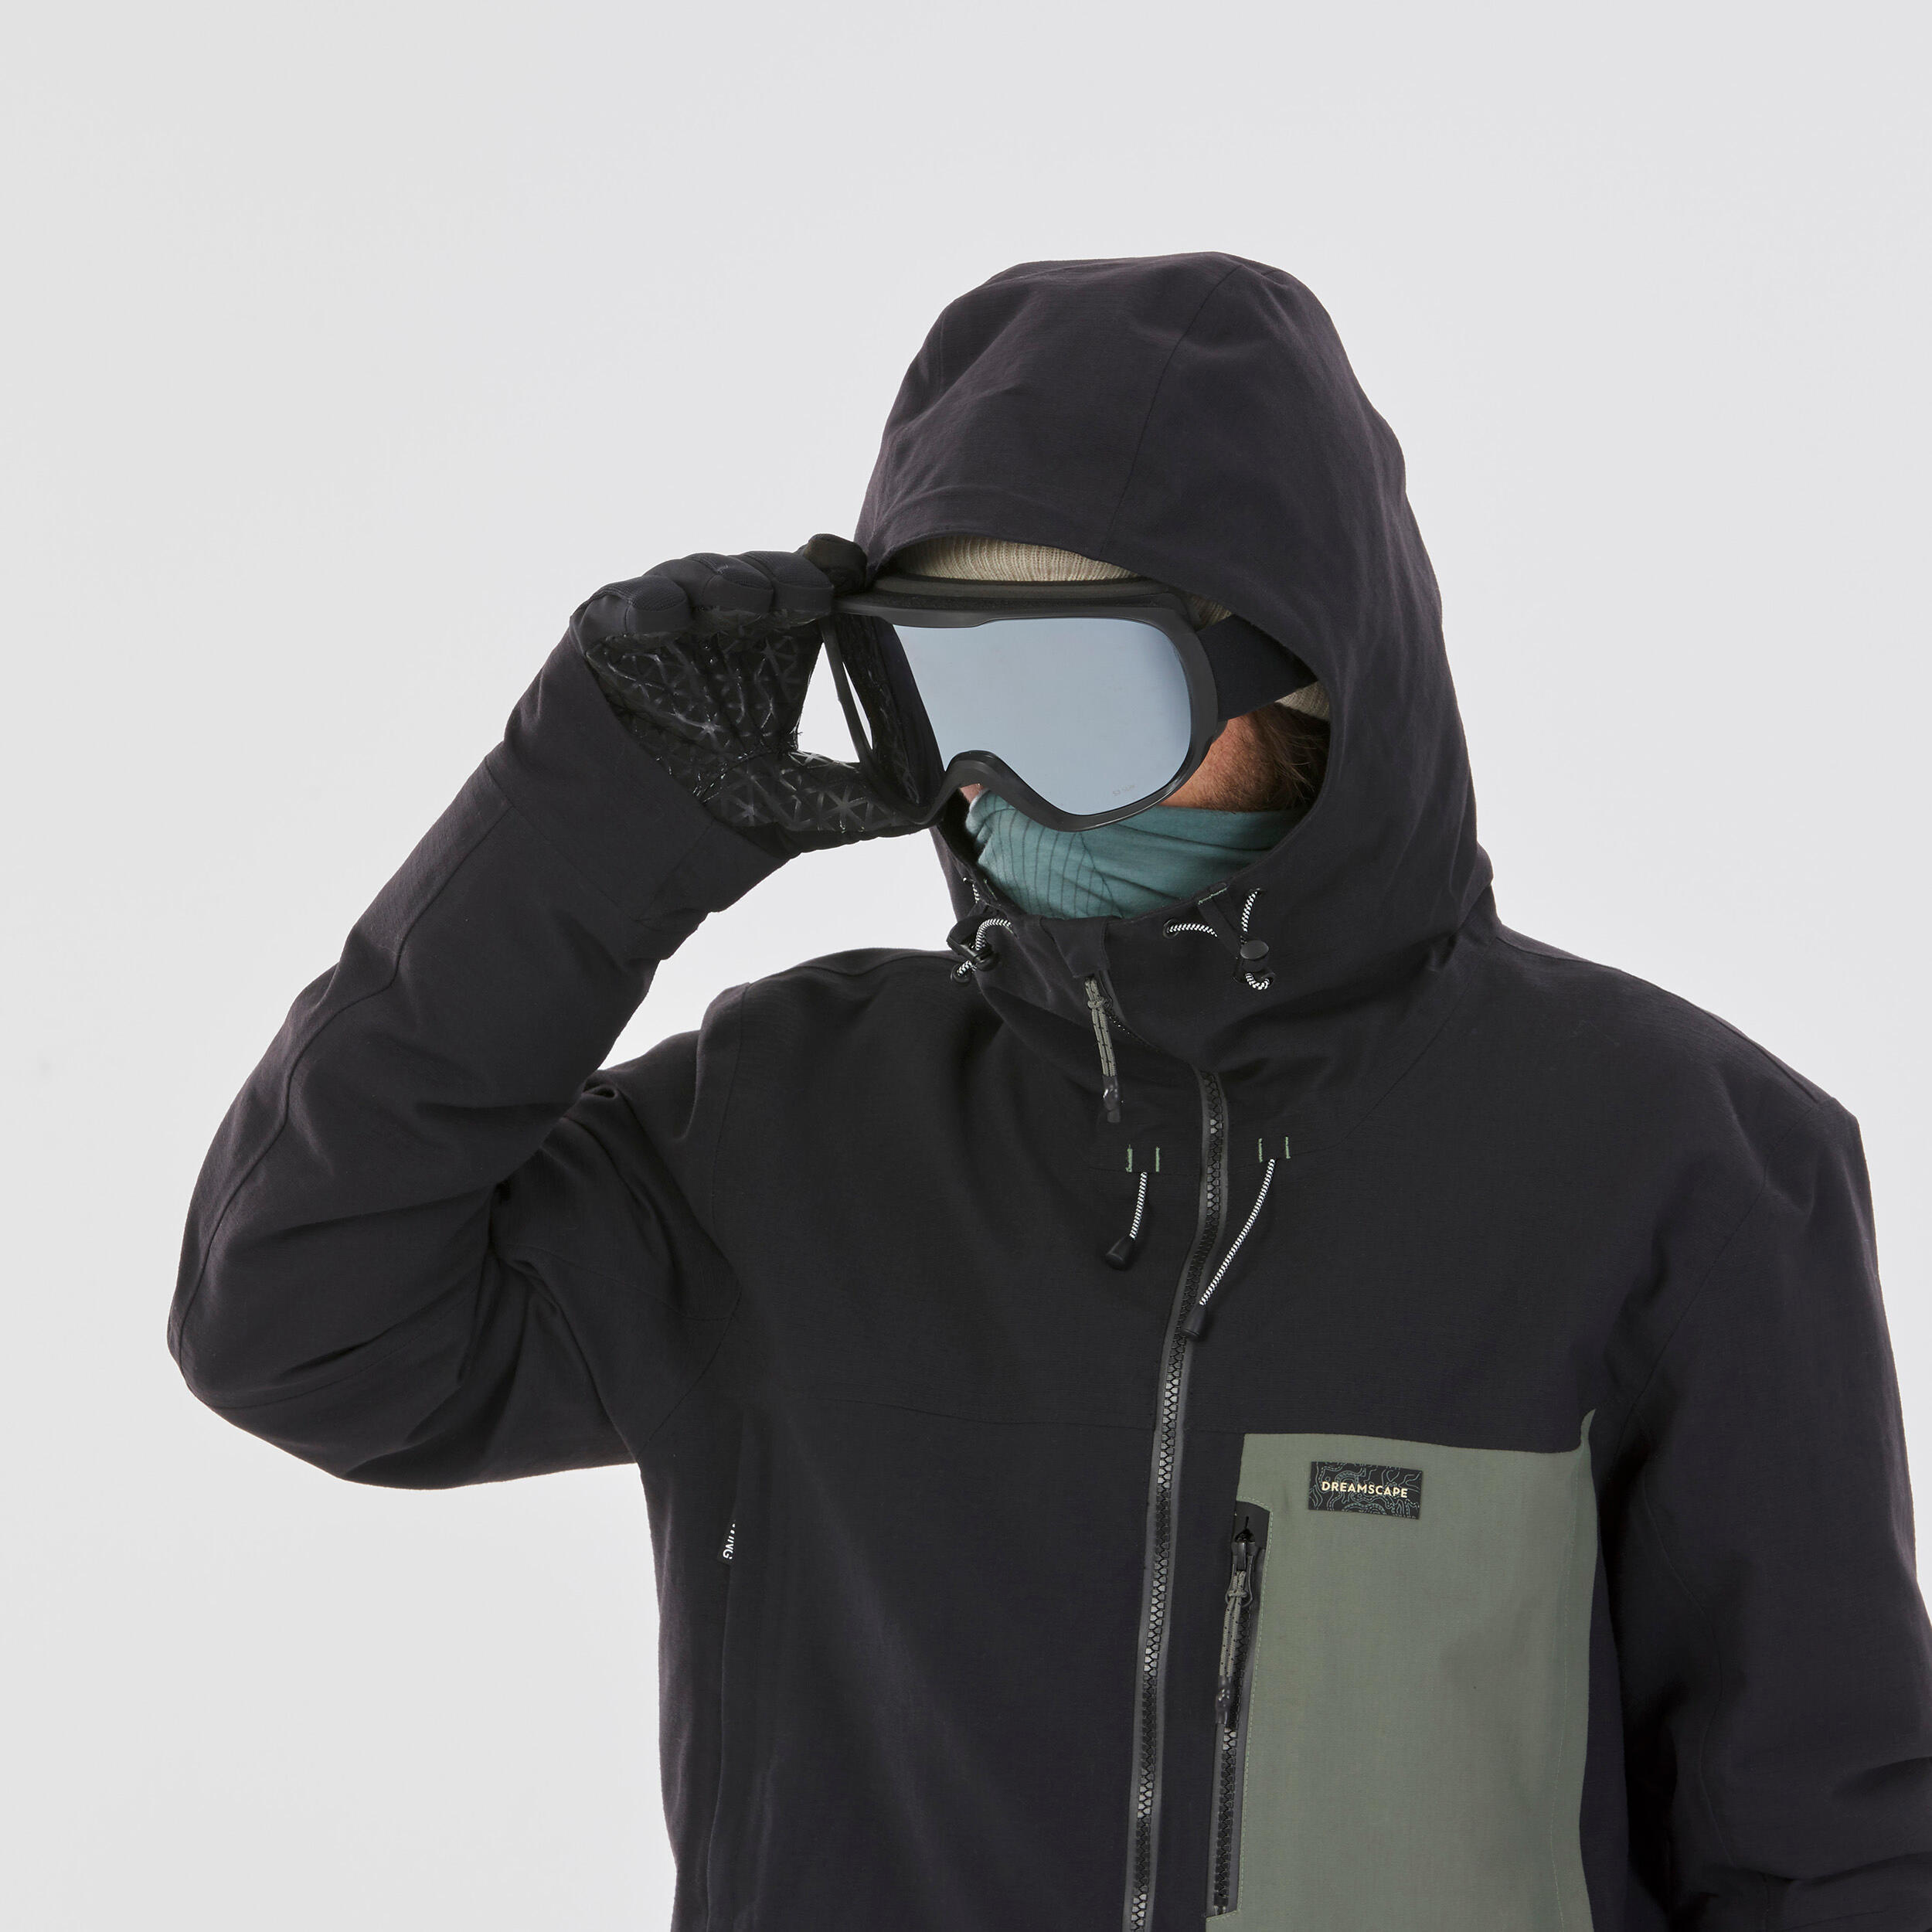 Refurbished Mens snowboard jacket compatible with ziprotec - A Grade 5/7